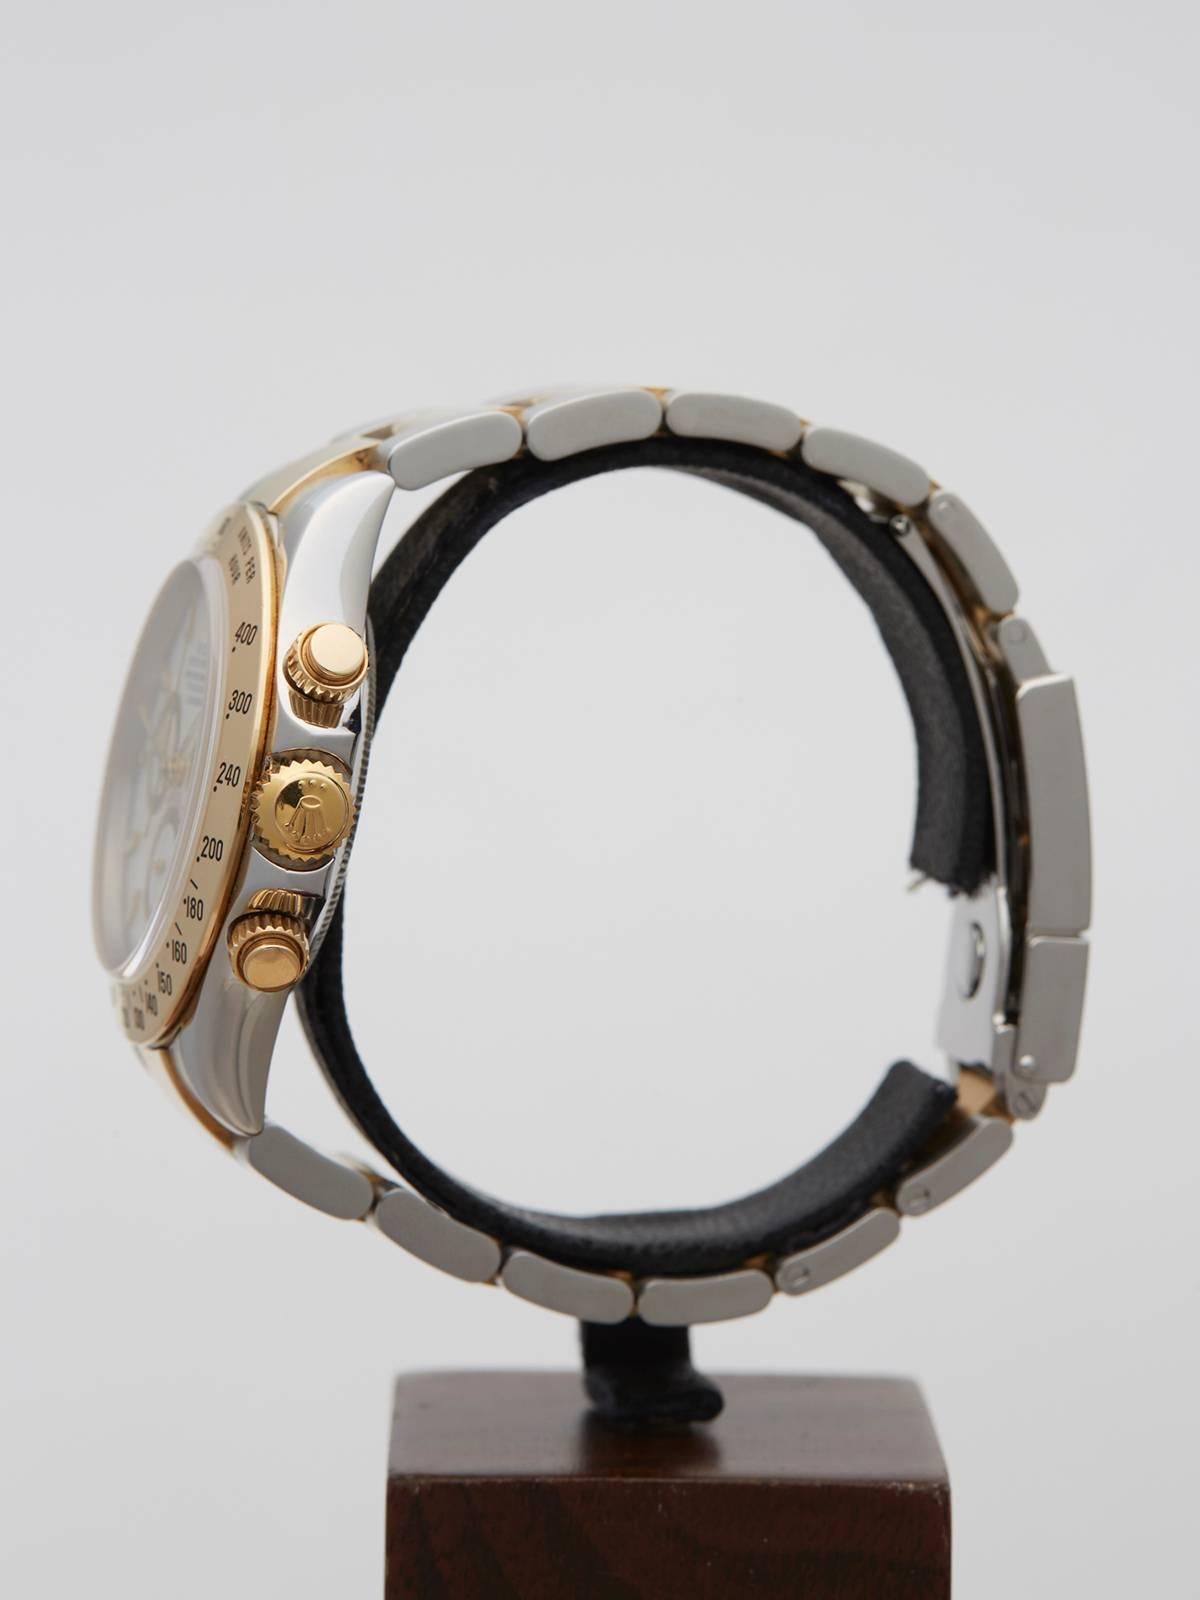 Rolex Daytona Gold Steel cosomograph chronograph Automatic Wristwatch Ref 116523 2